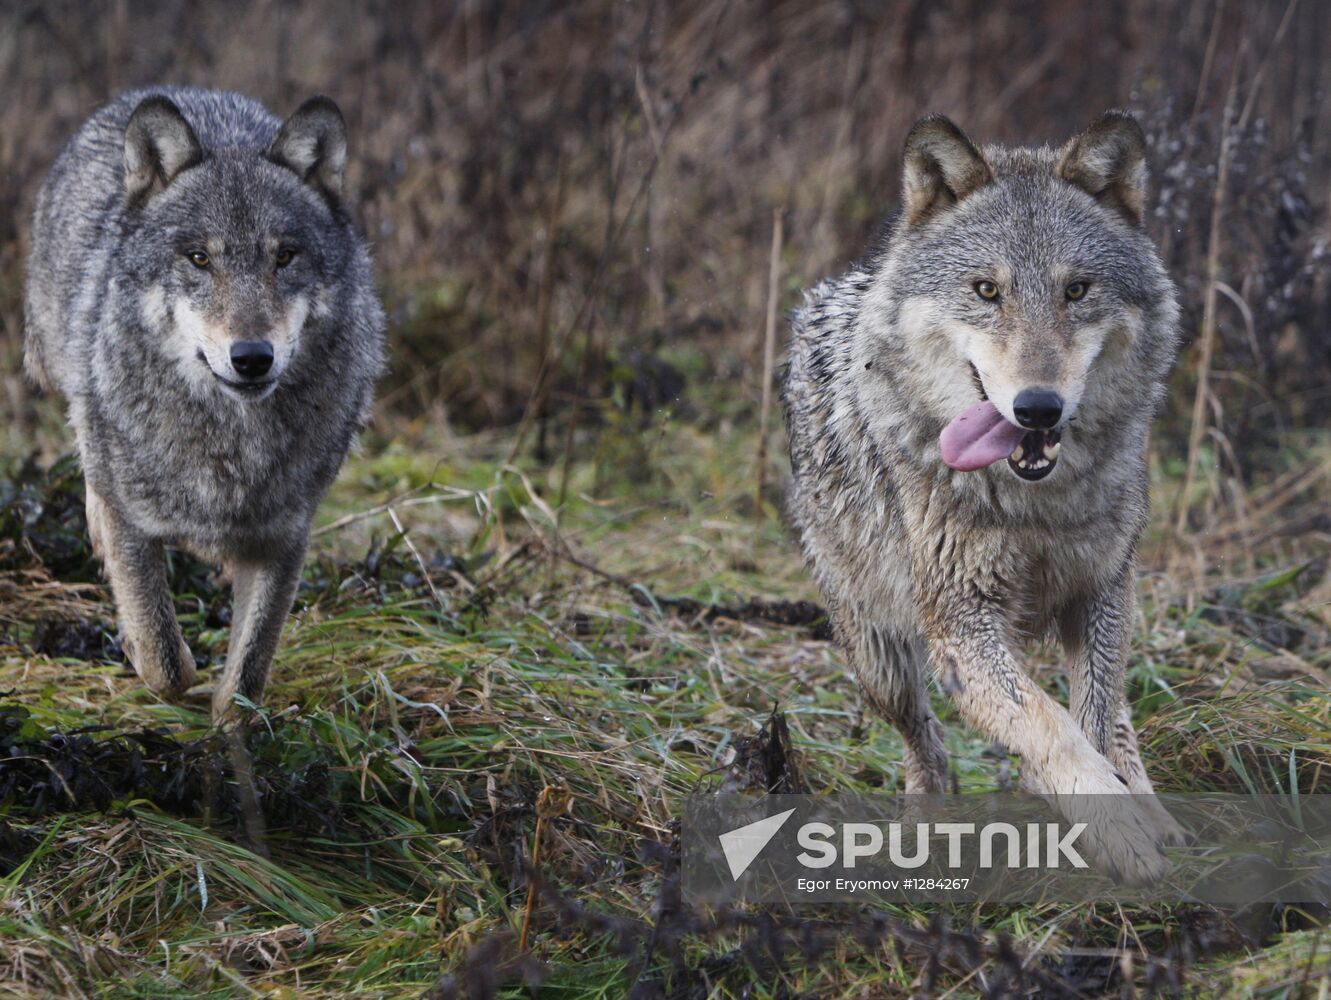 Belarusian ecologist tames wolves